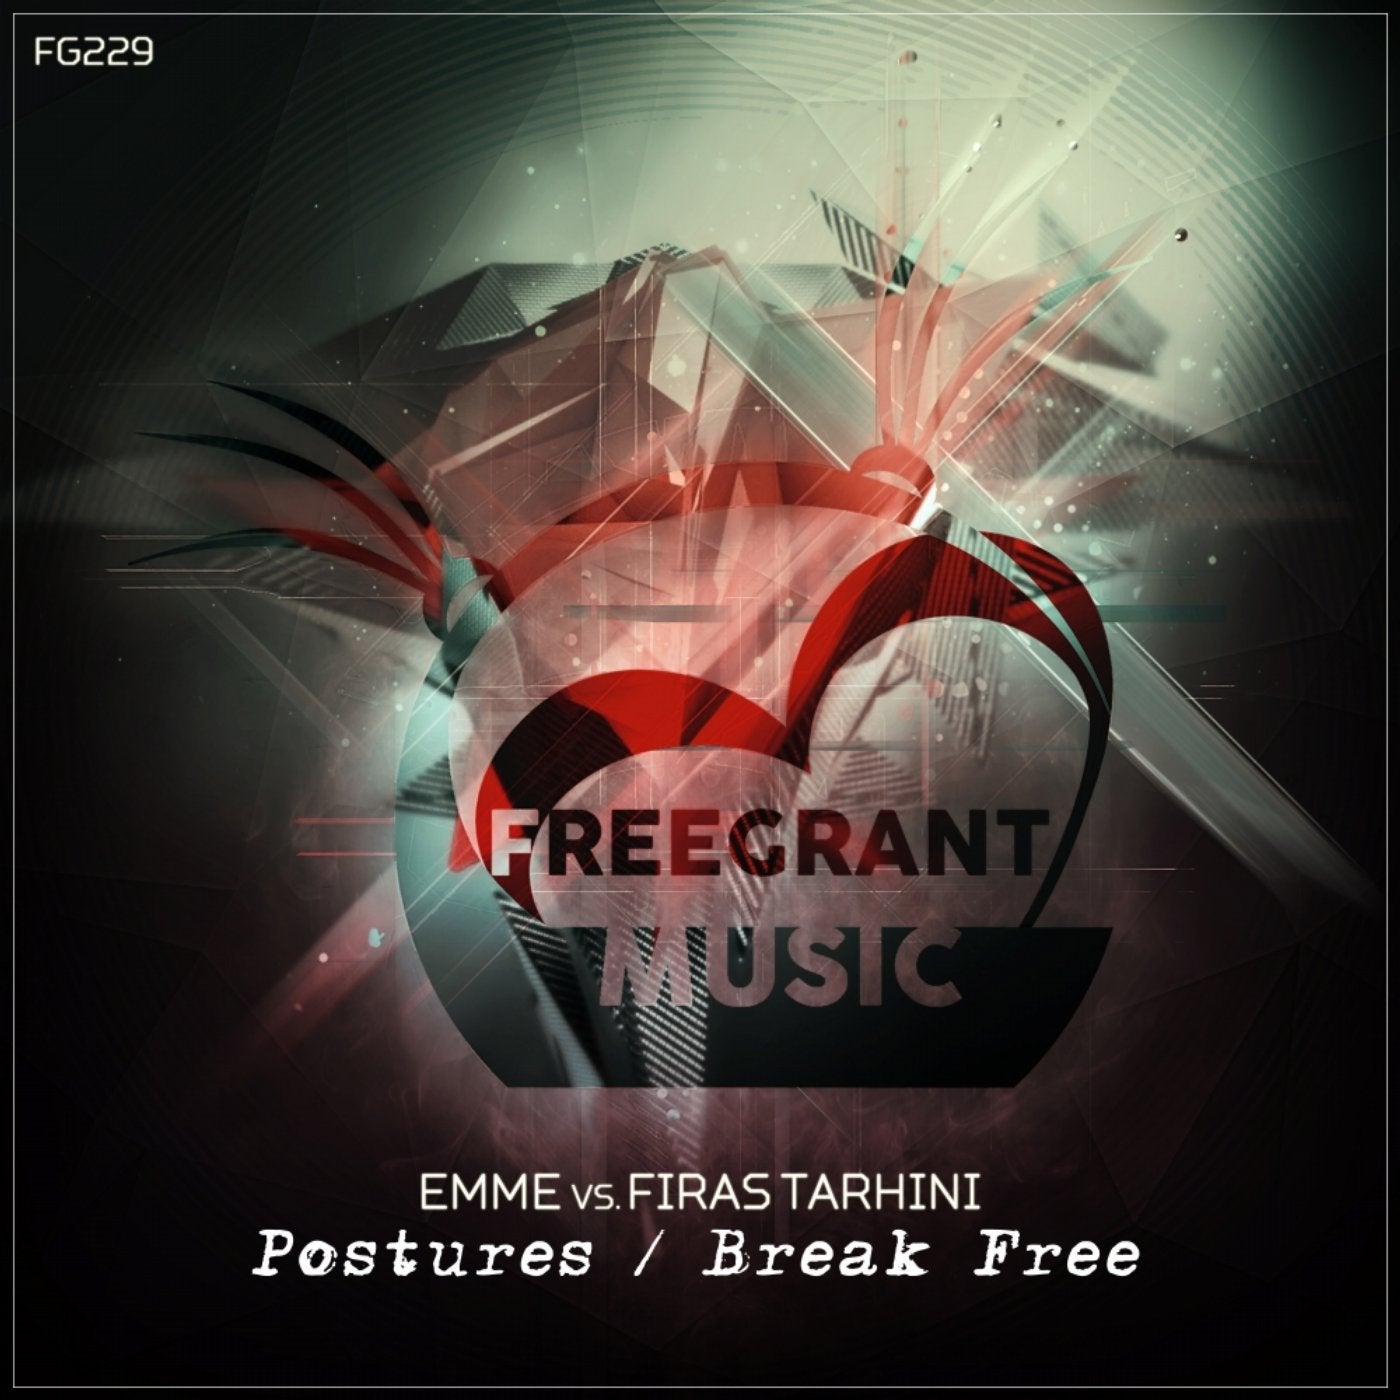 Postures / Break Free